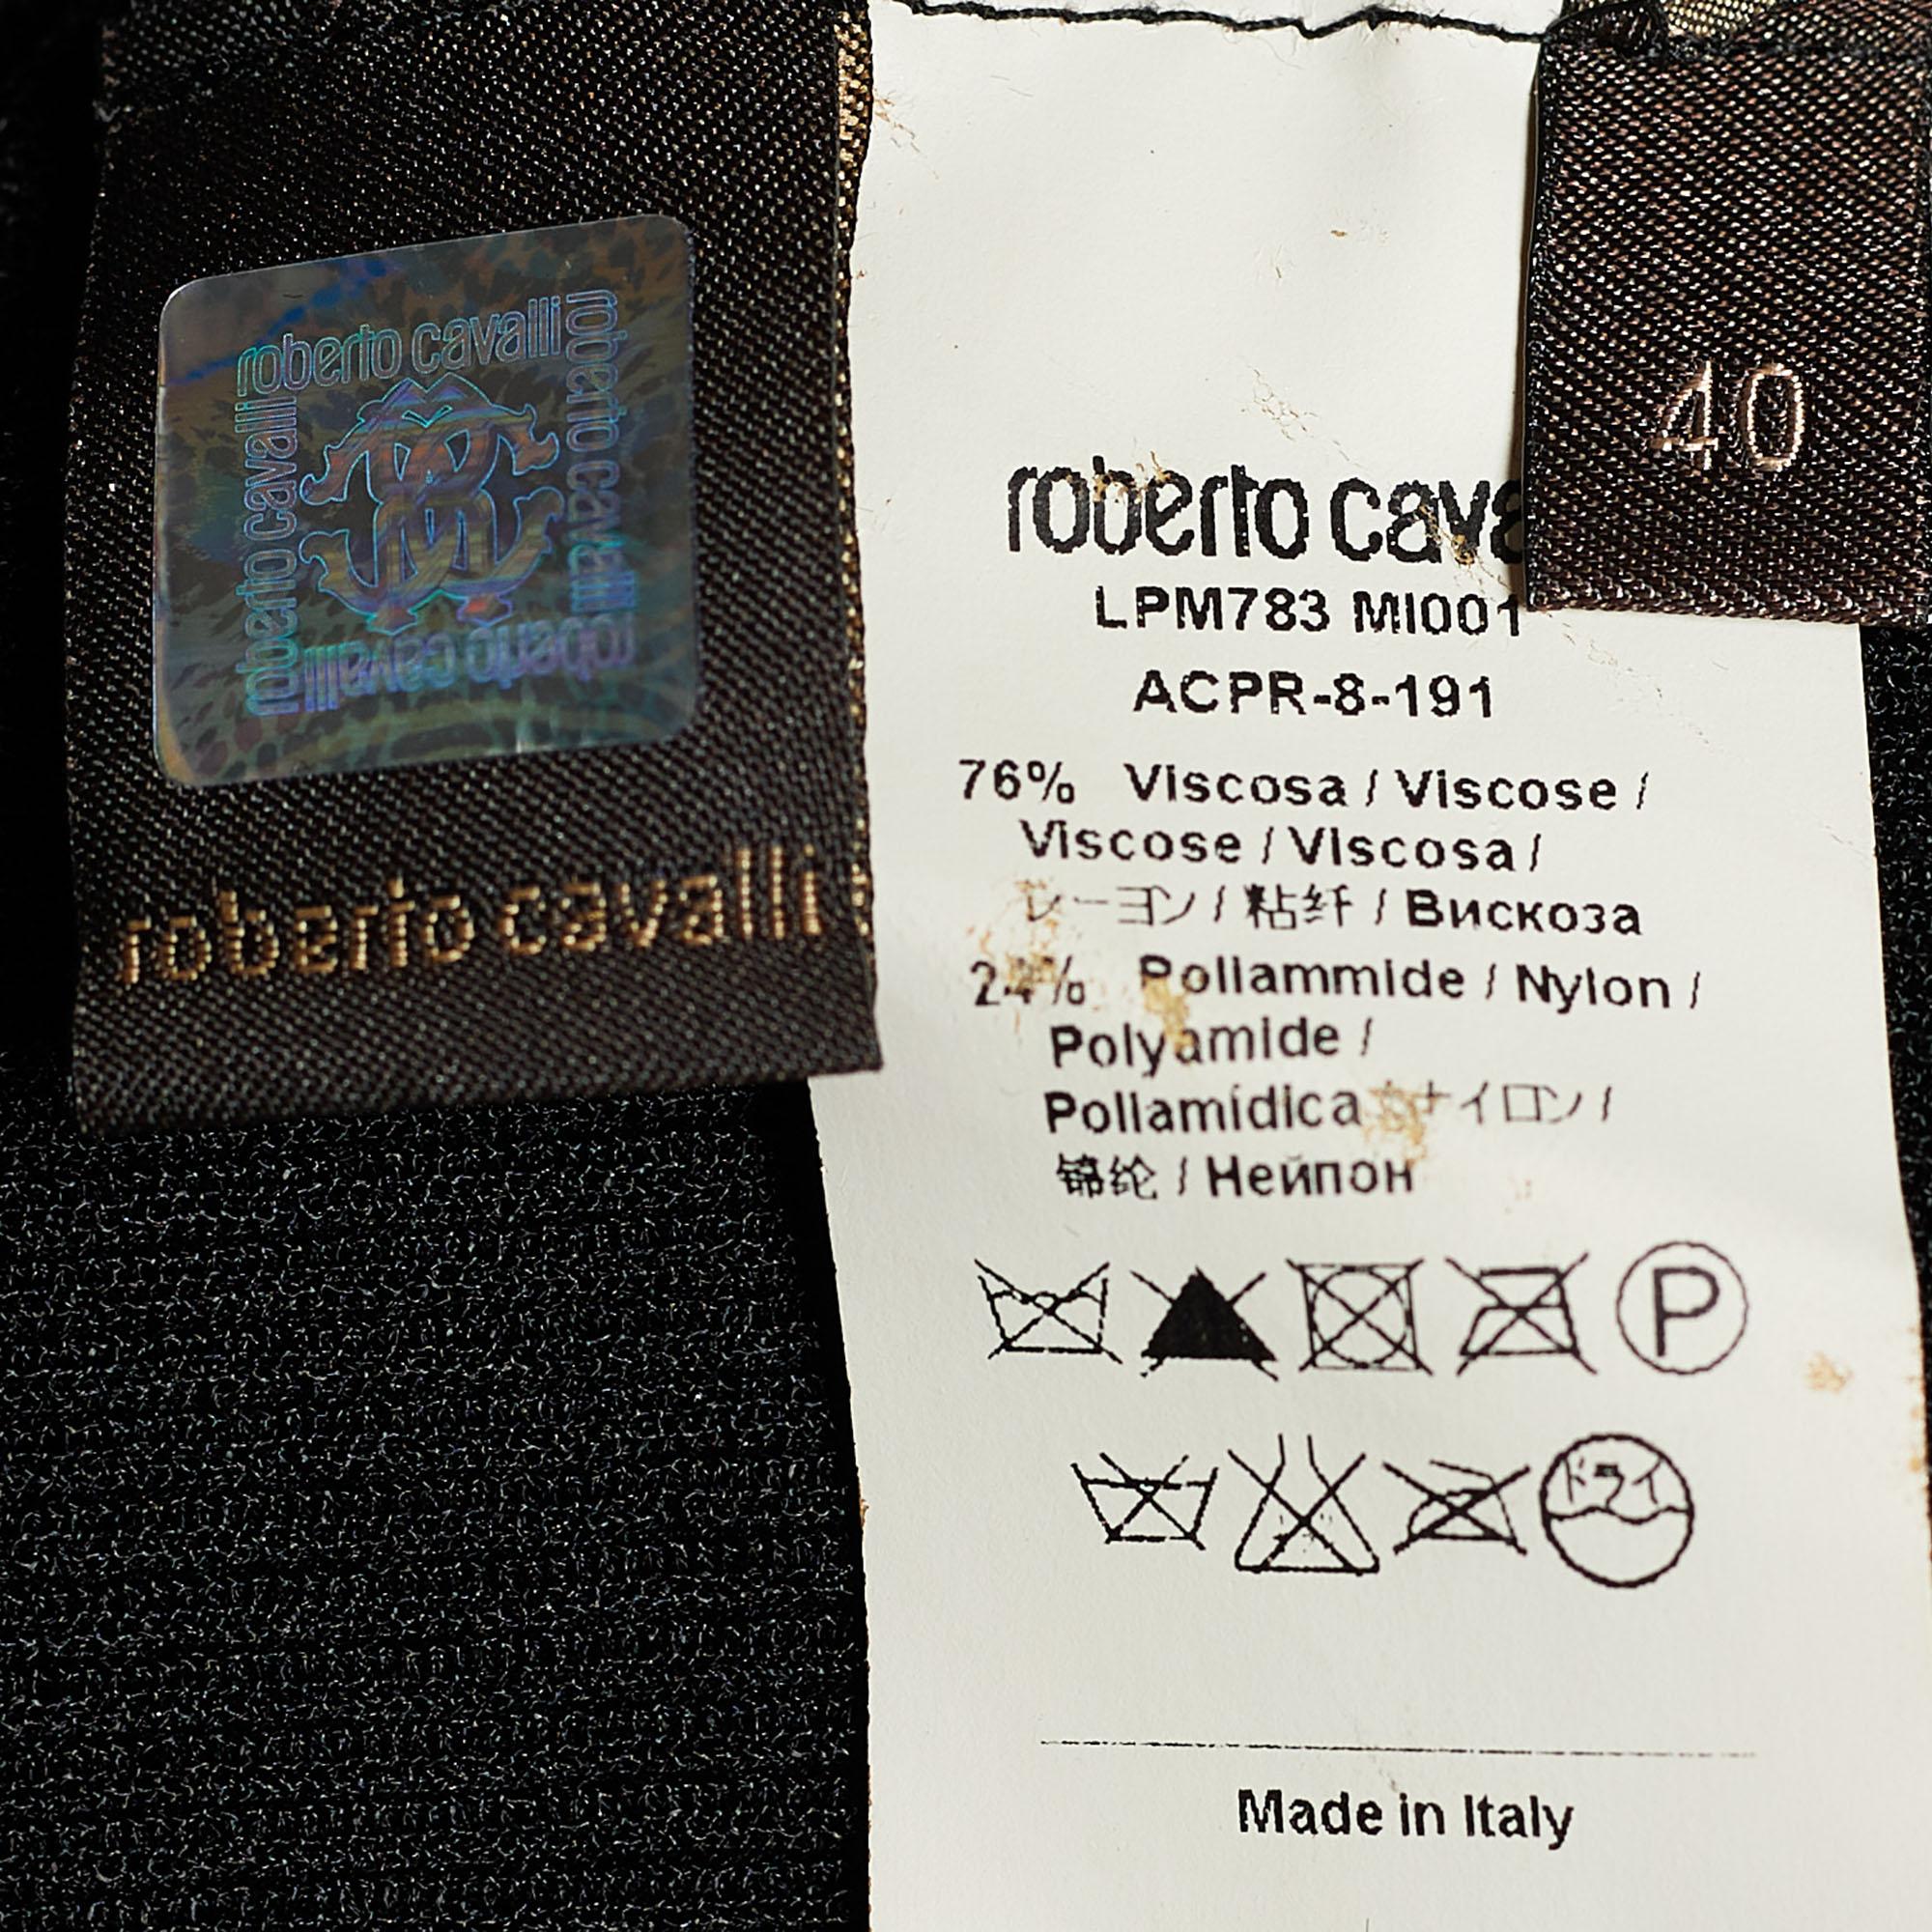 Roberto Cavalli Black Lace Frill Detail Sleeveless Top S In Good Condition For Sale In Dubai, Al Qouz 2